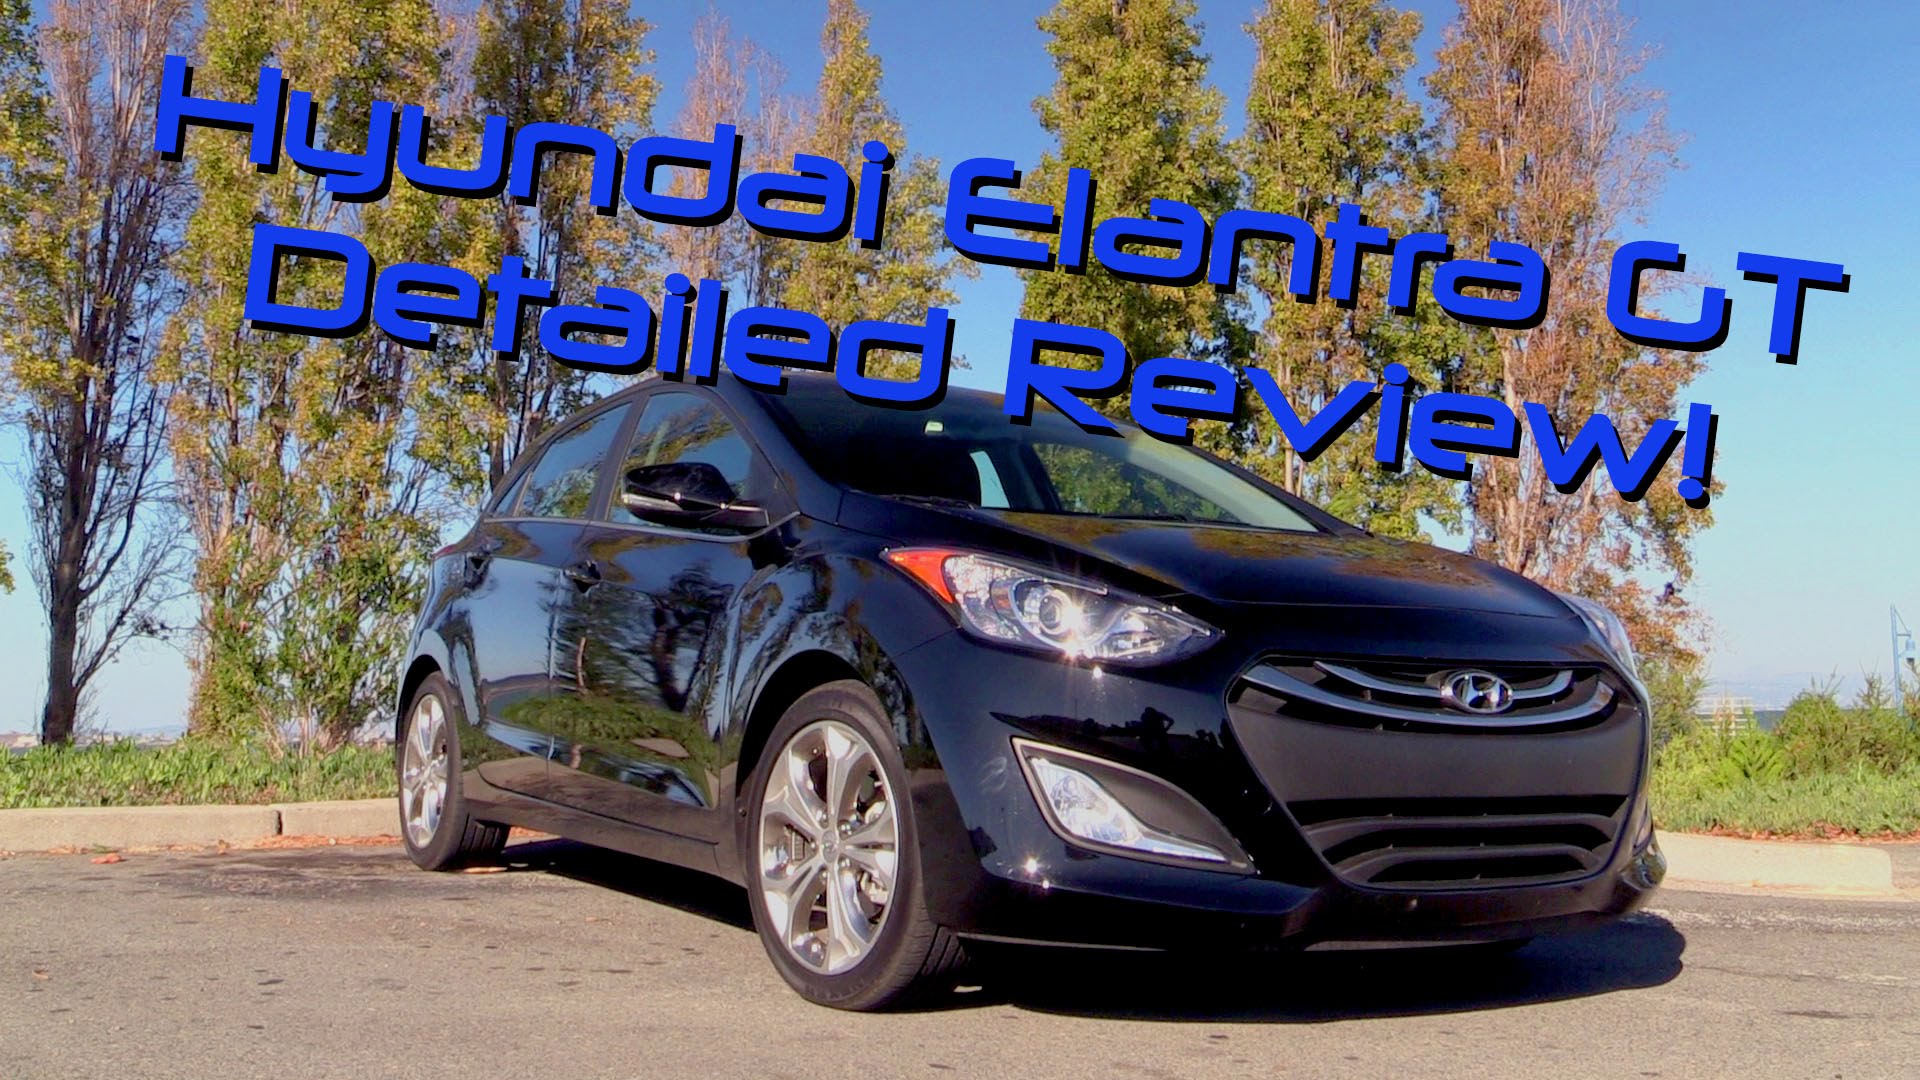 2016 Hyundai Elantra gt Car Review WalkThrough Video